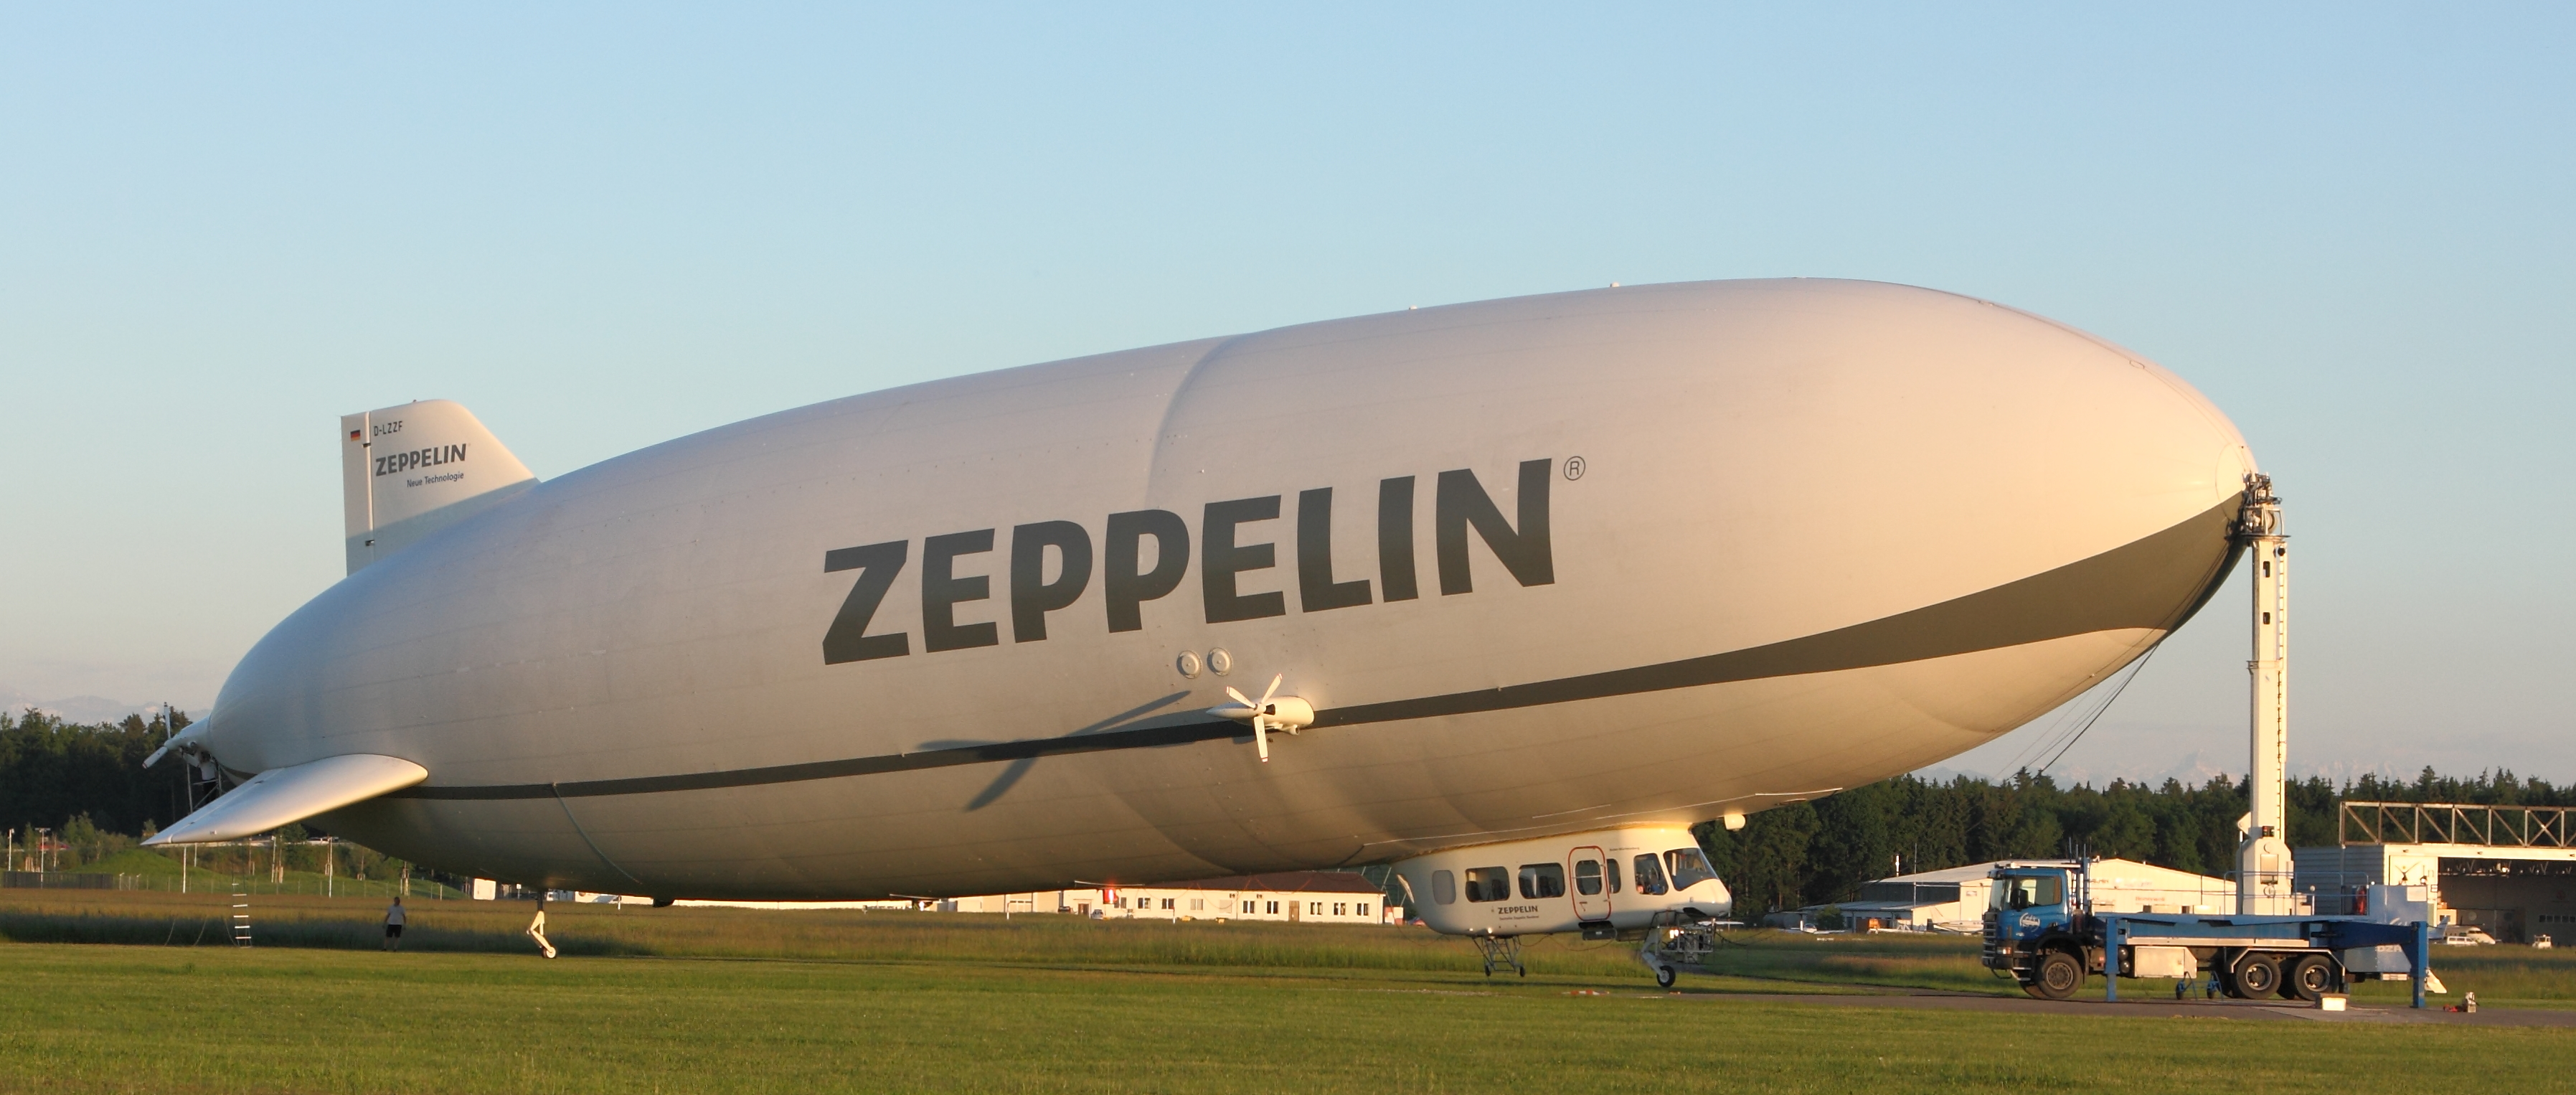 Zeppellin NT 3 amk